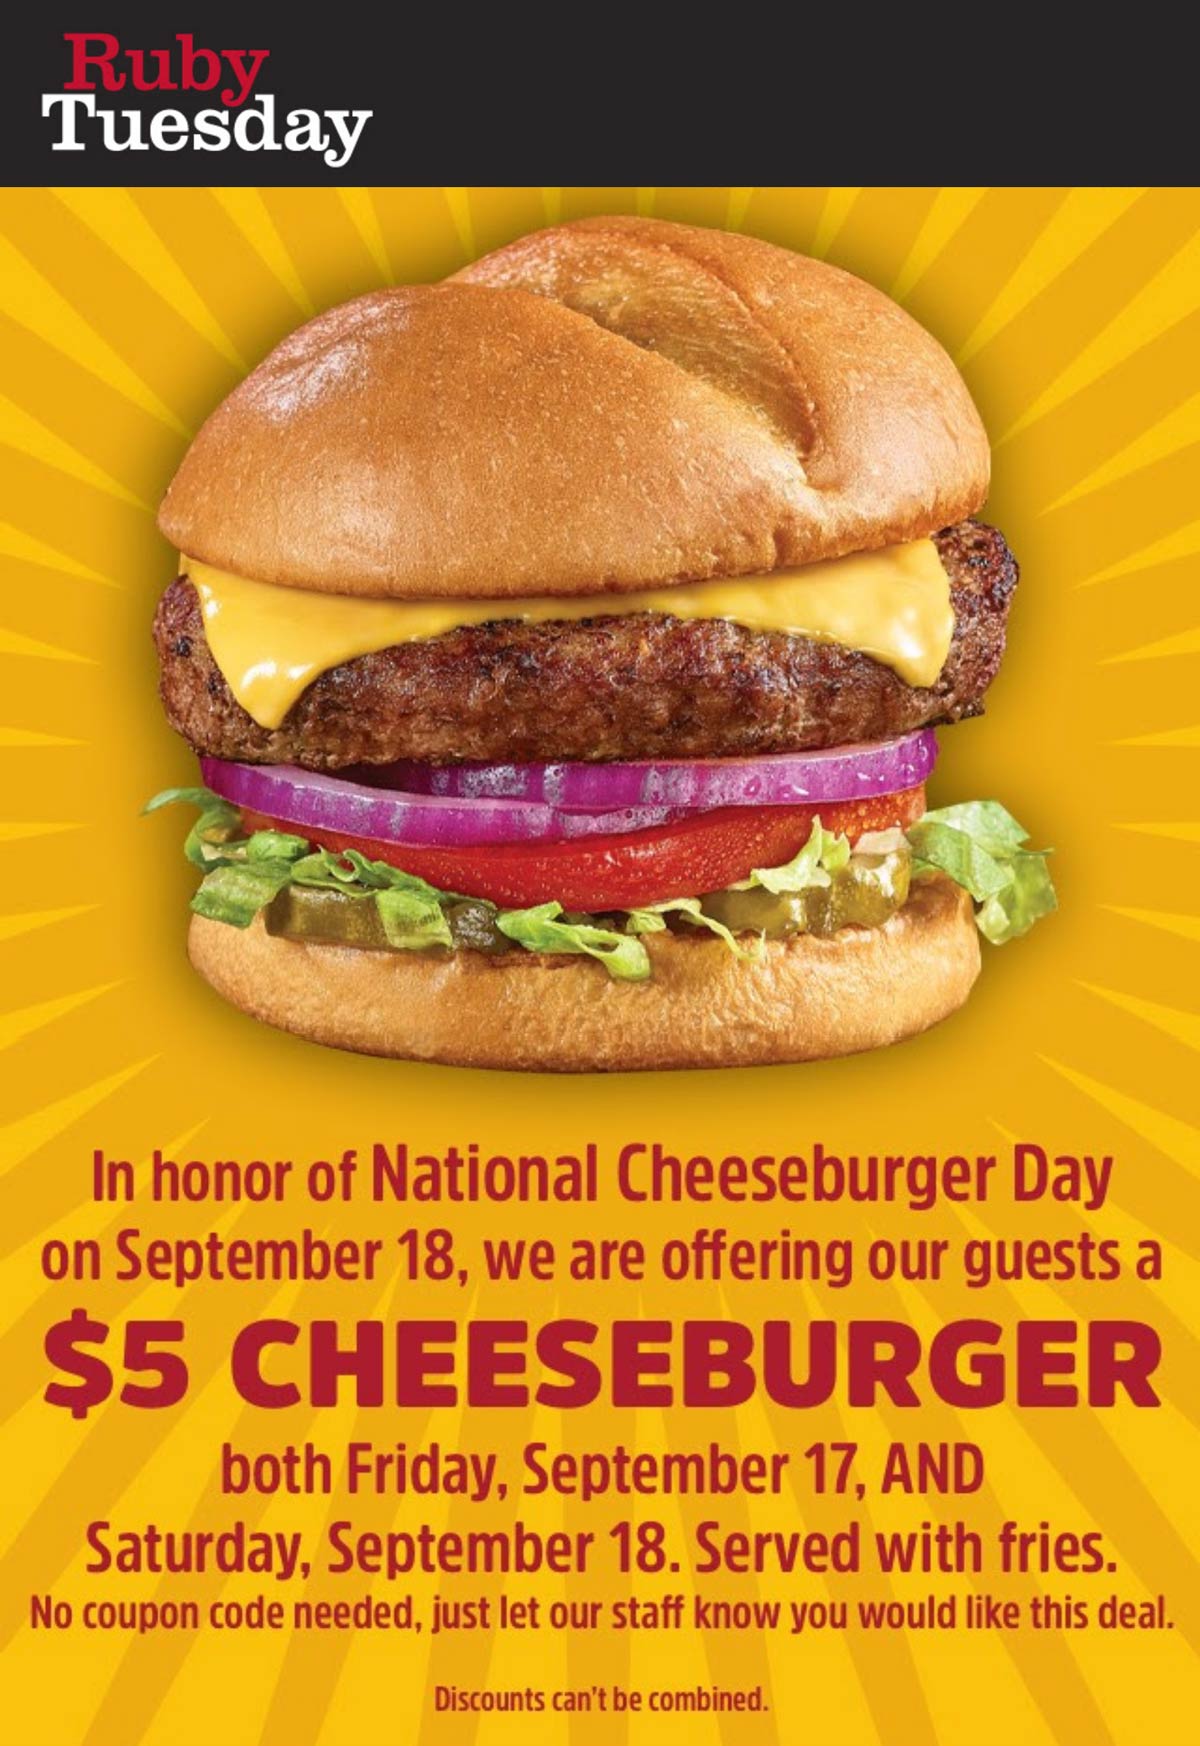 Ruby Tuesday restaurants Coupon  $5 cheeseburger & fries at Ruby Tuesday #rubytuesday 